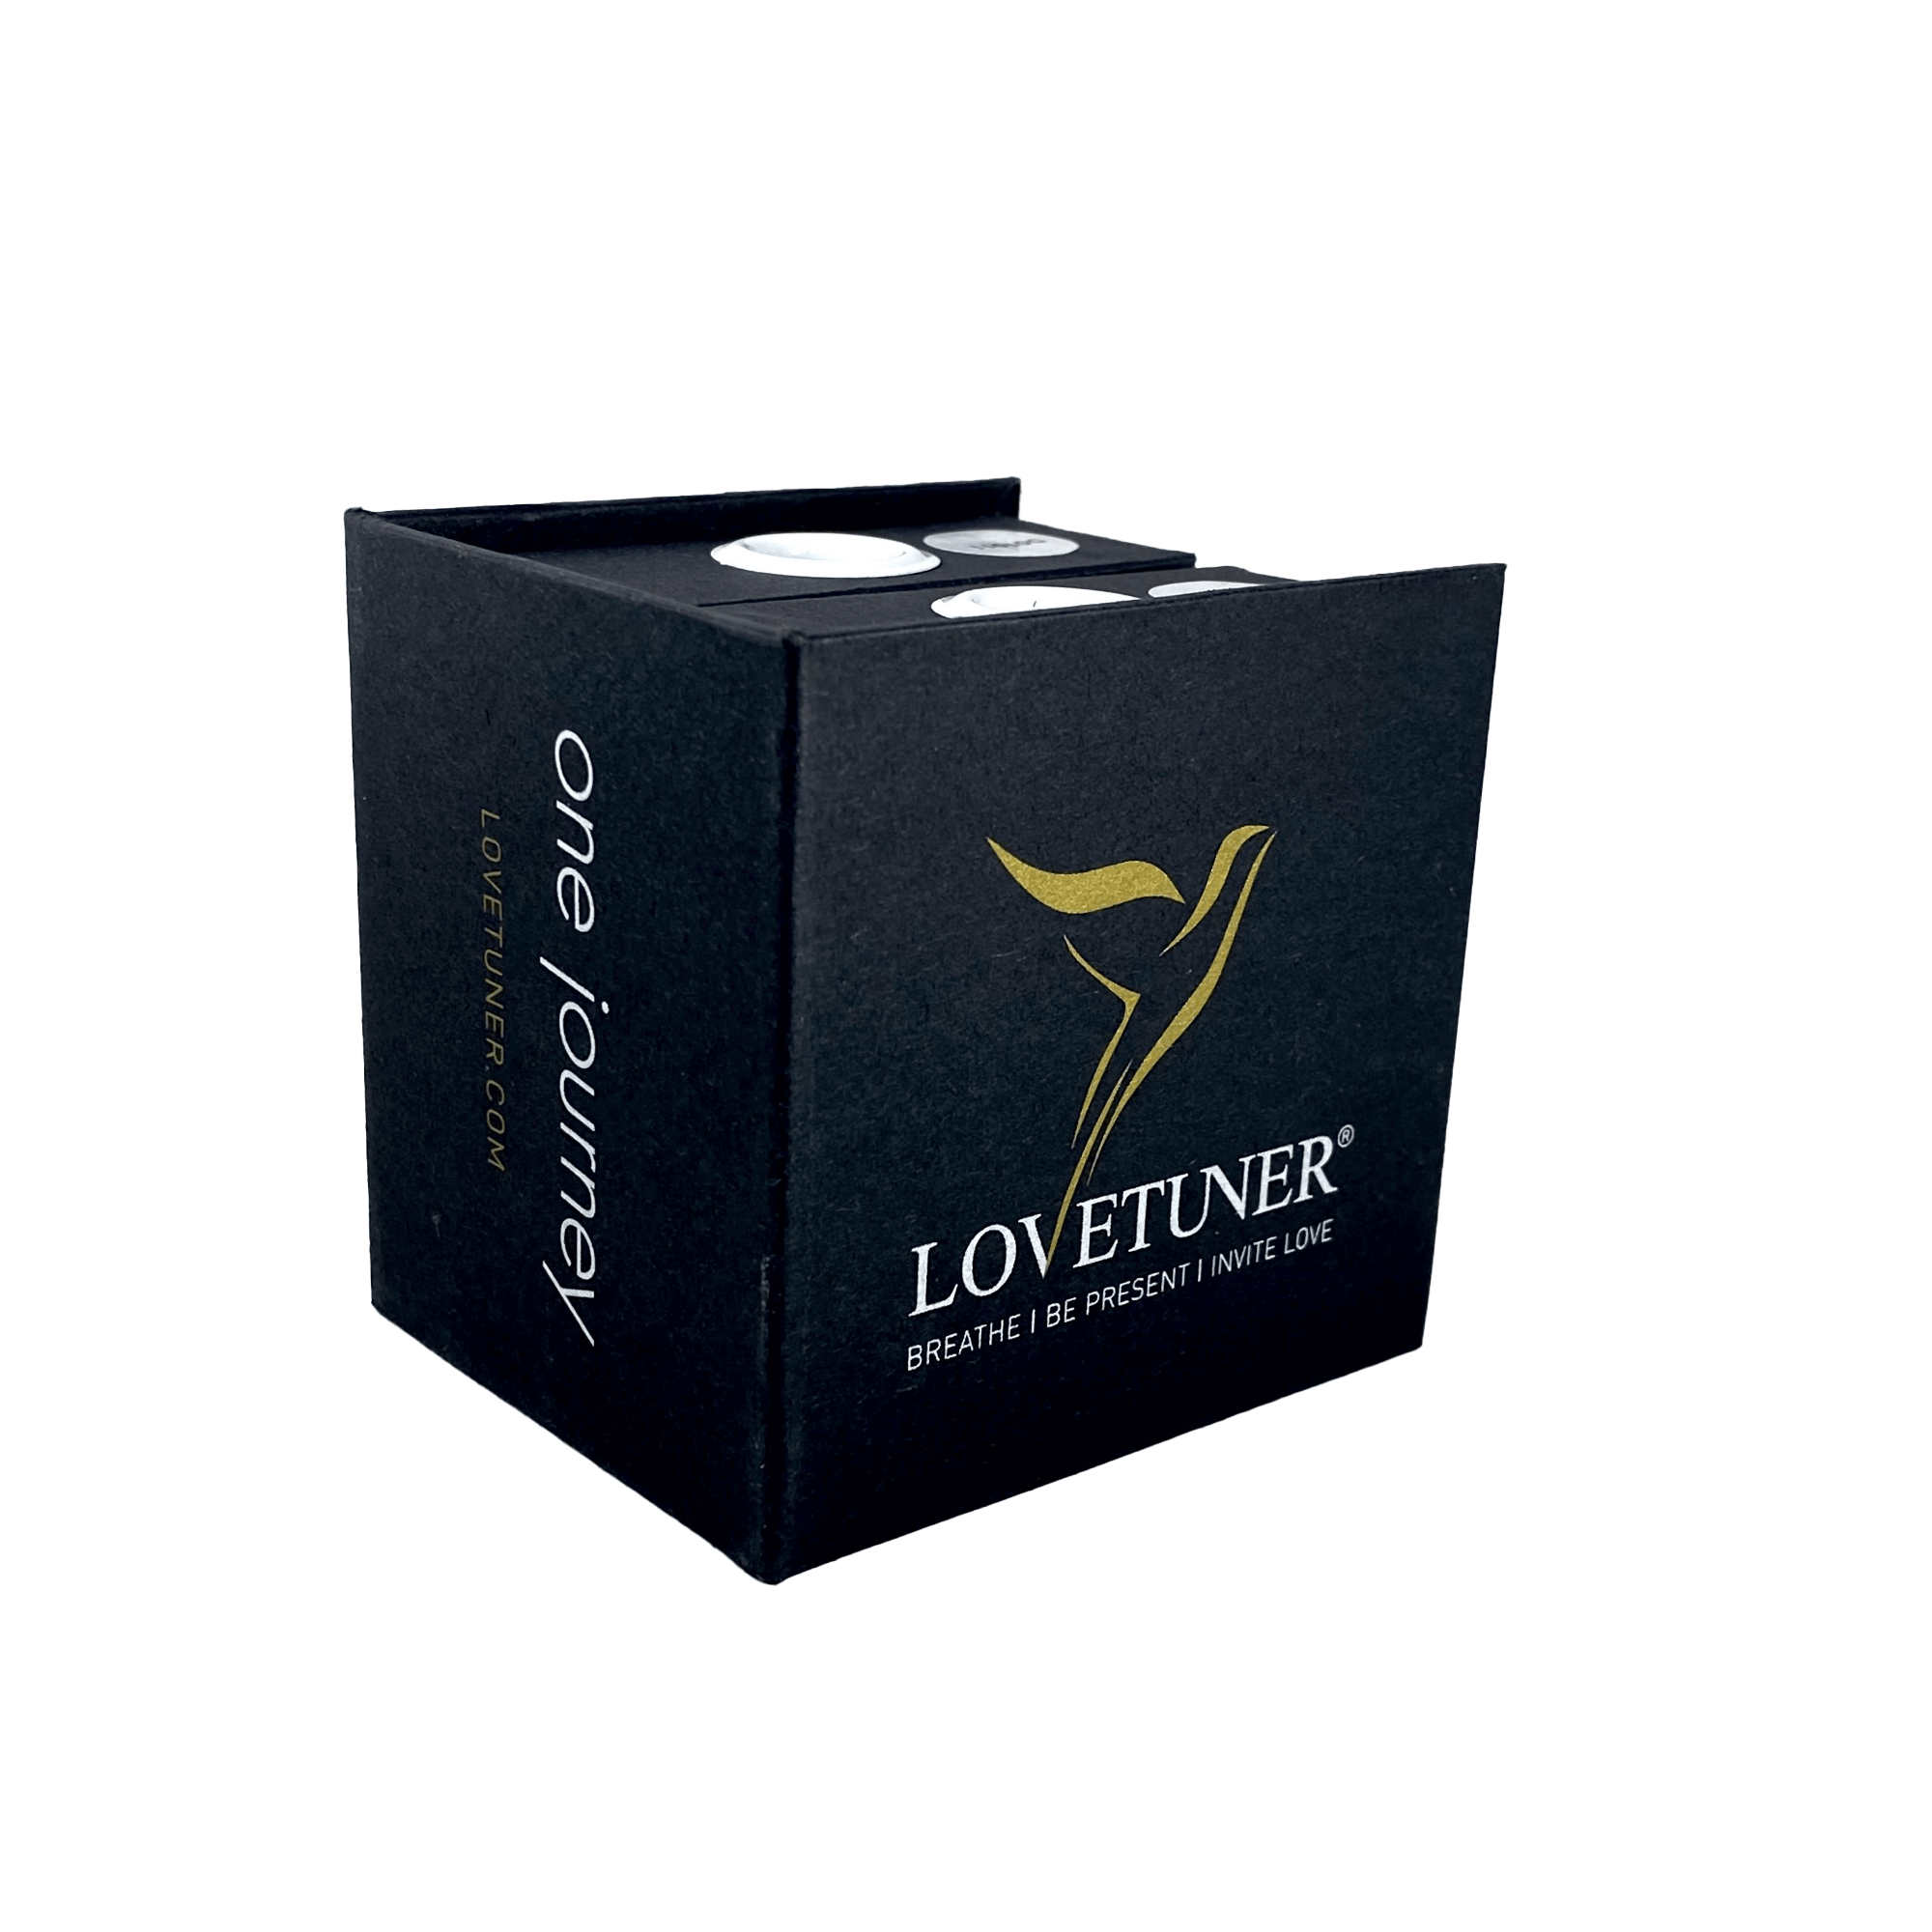 Duet Box enthält 2 Bronze Lovetuners